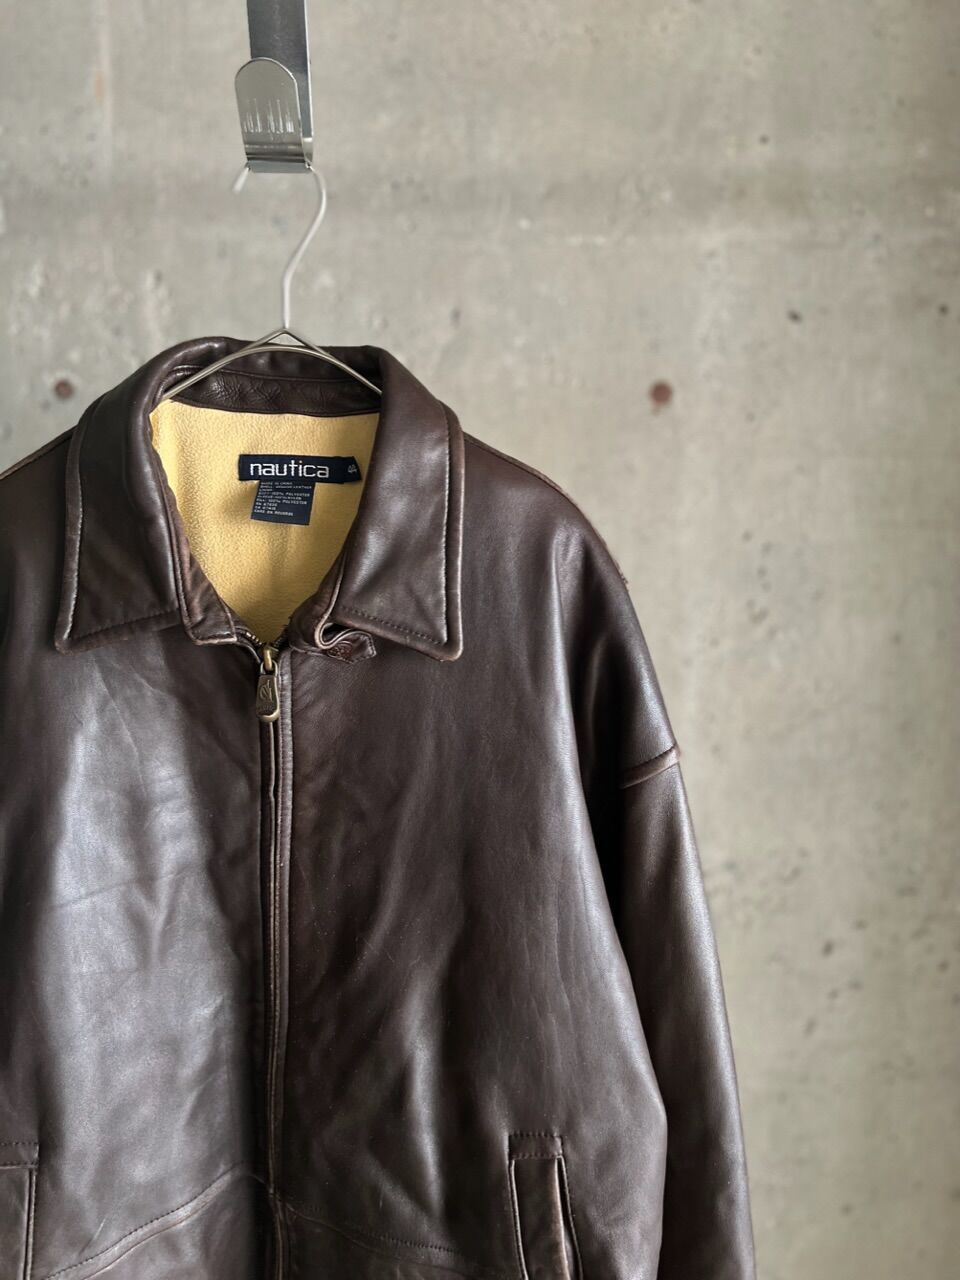 90s “nautica” leather jacket